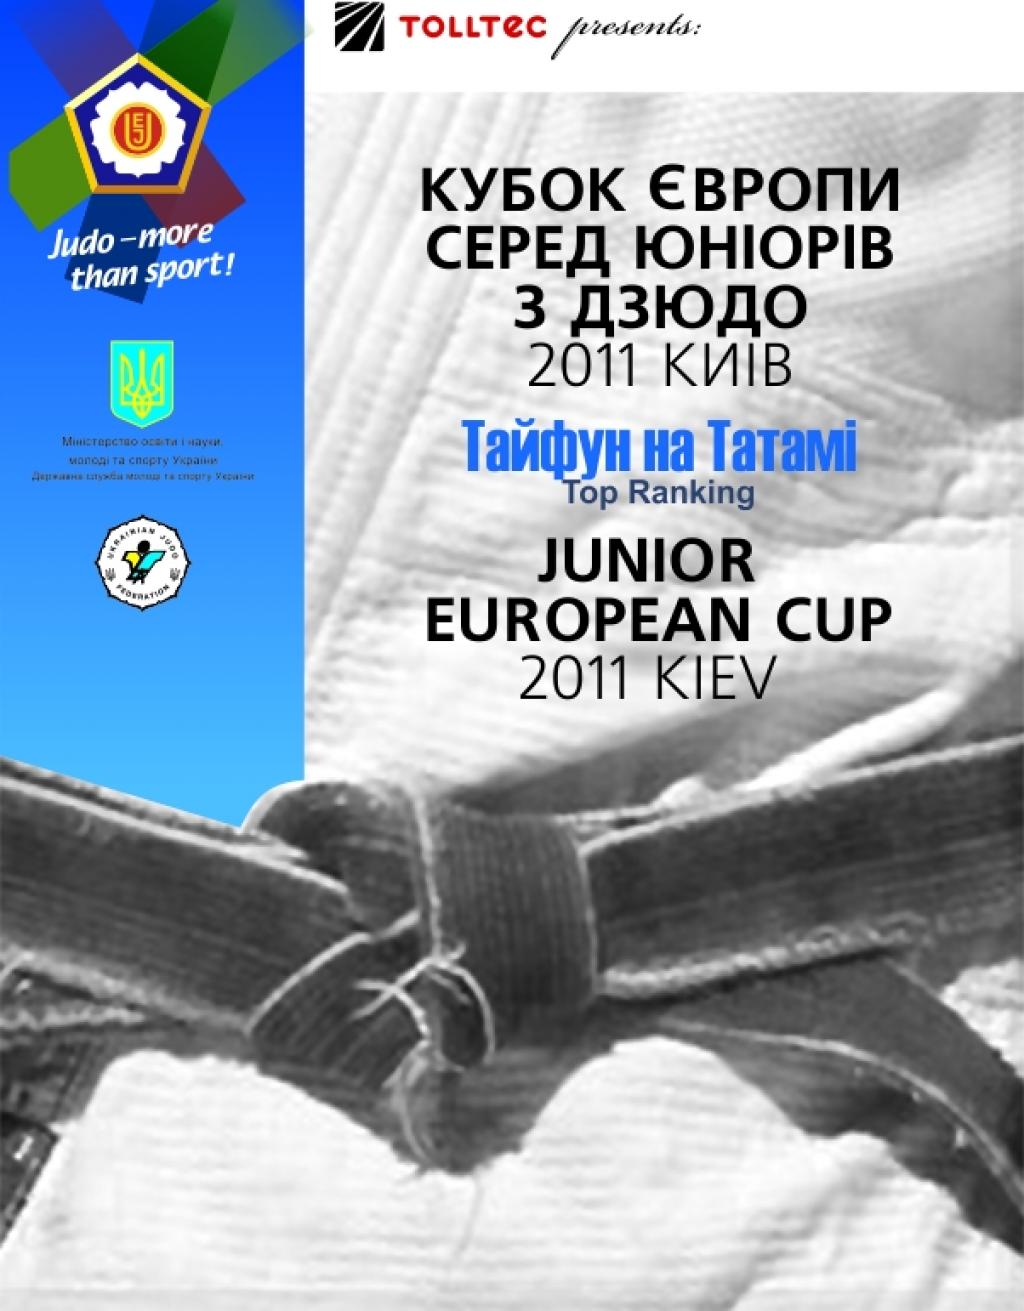 Kiev ready for European Junior Cup